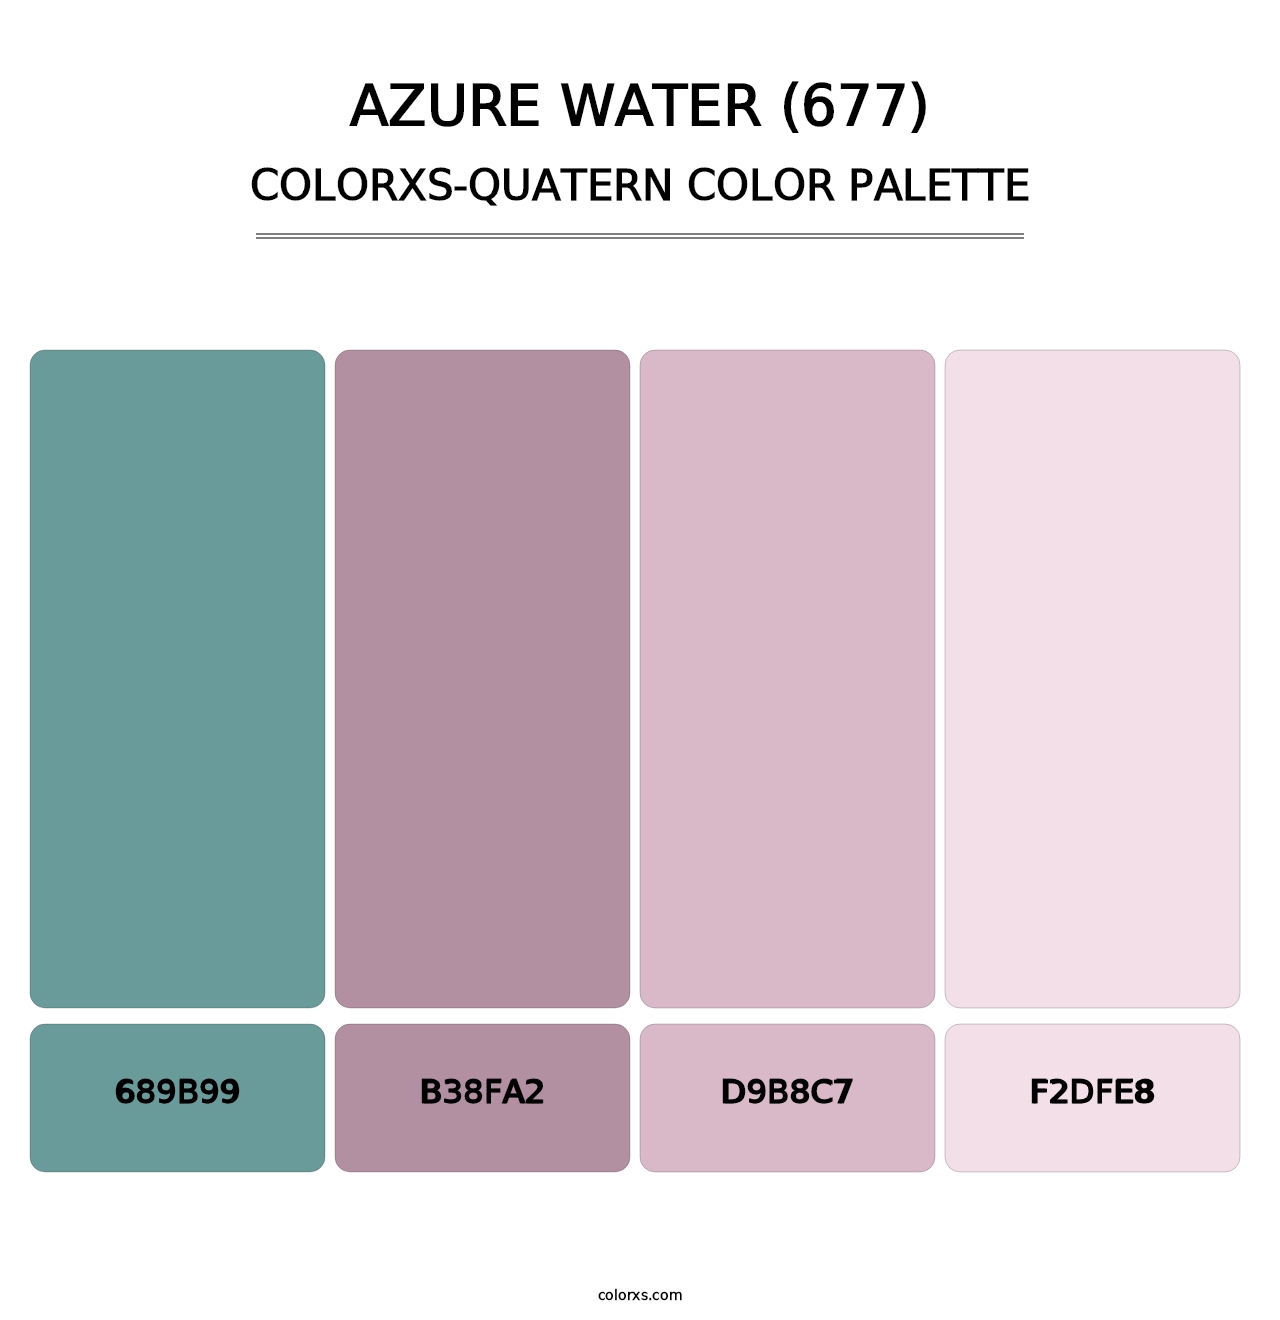 Azure Water (677) - Colorxs Quatern Palette